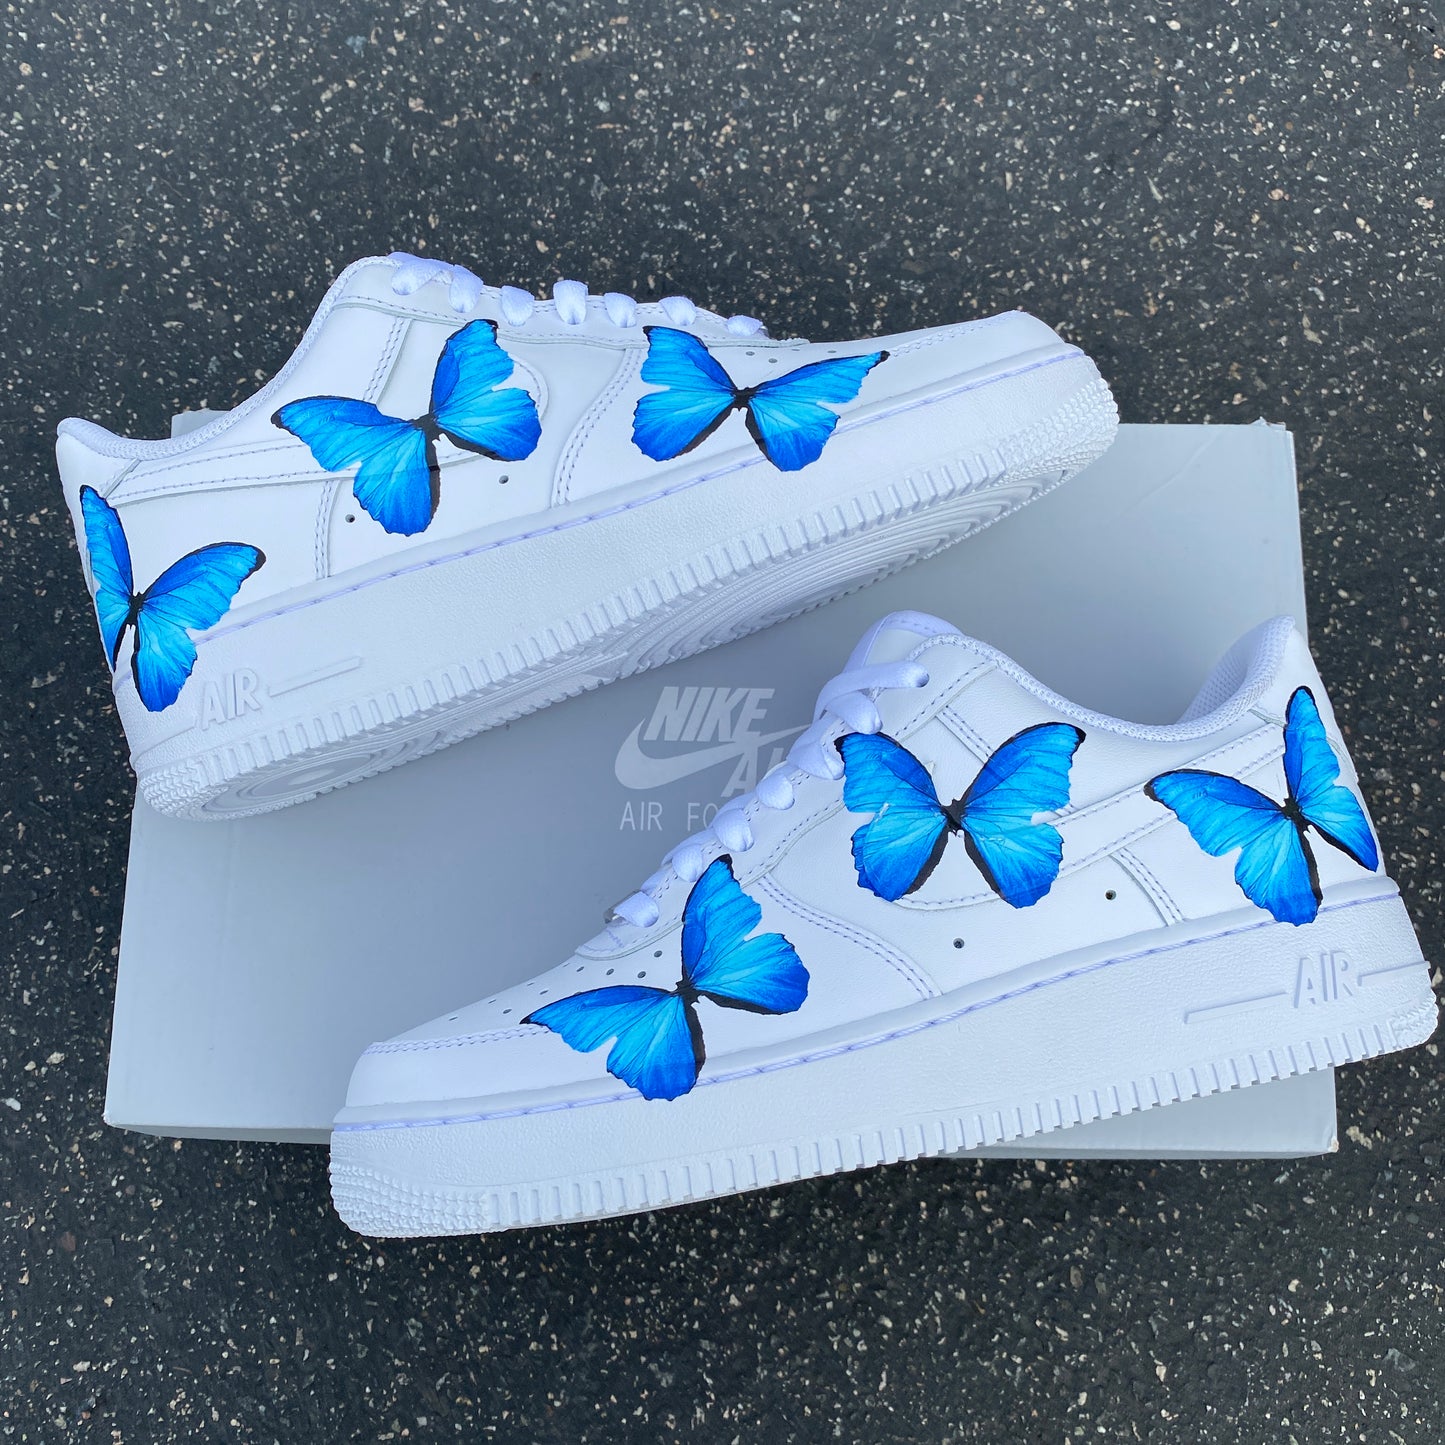 Custom Nike Air Force 1 Blue ButterFLY